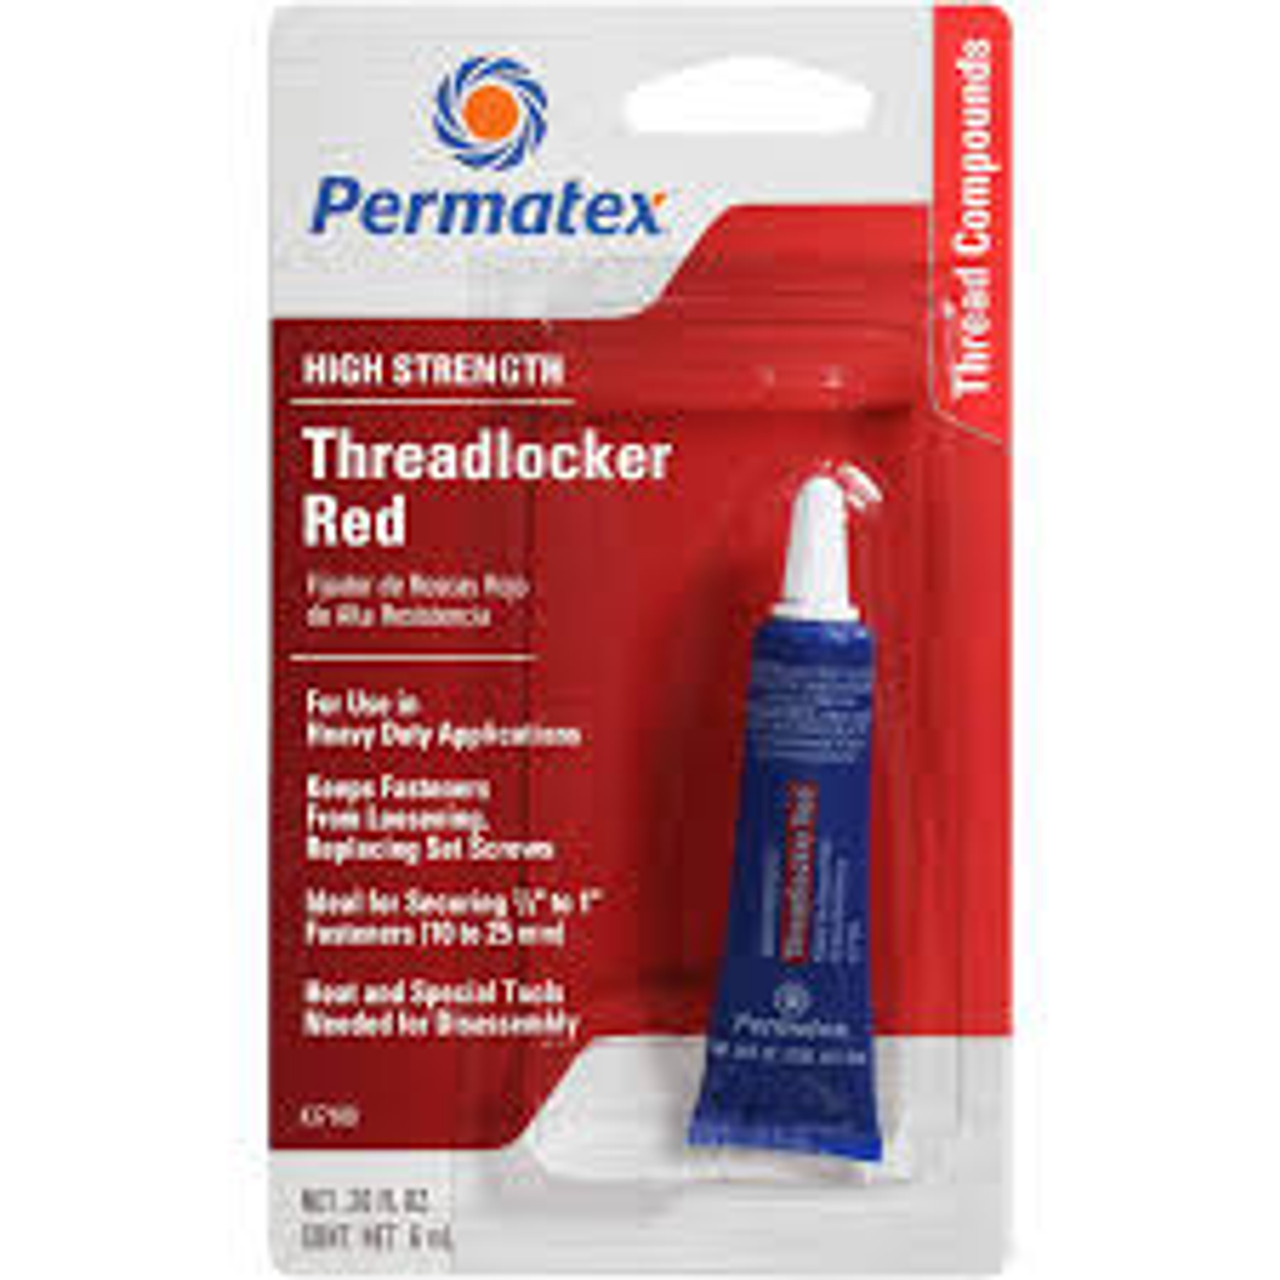 Permatex Threadlocker Red HIGH STRENGTH - 27100

